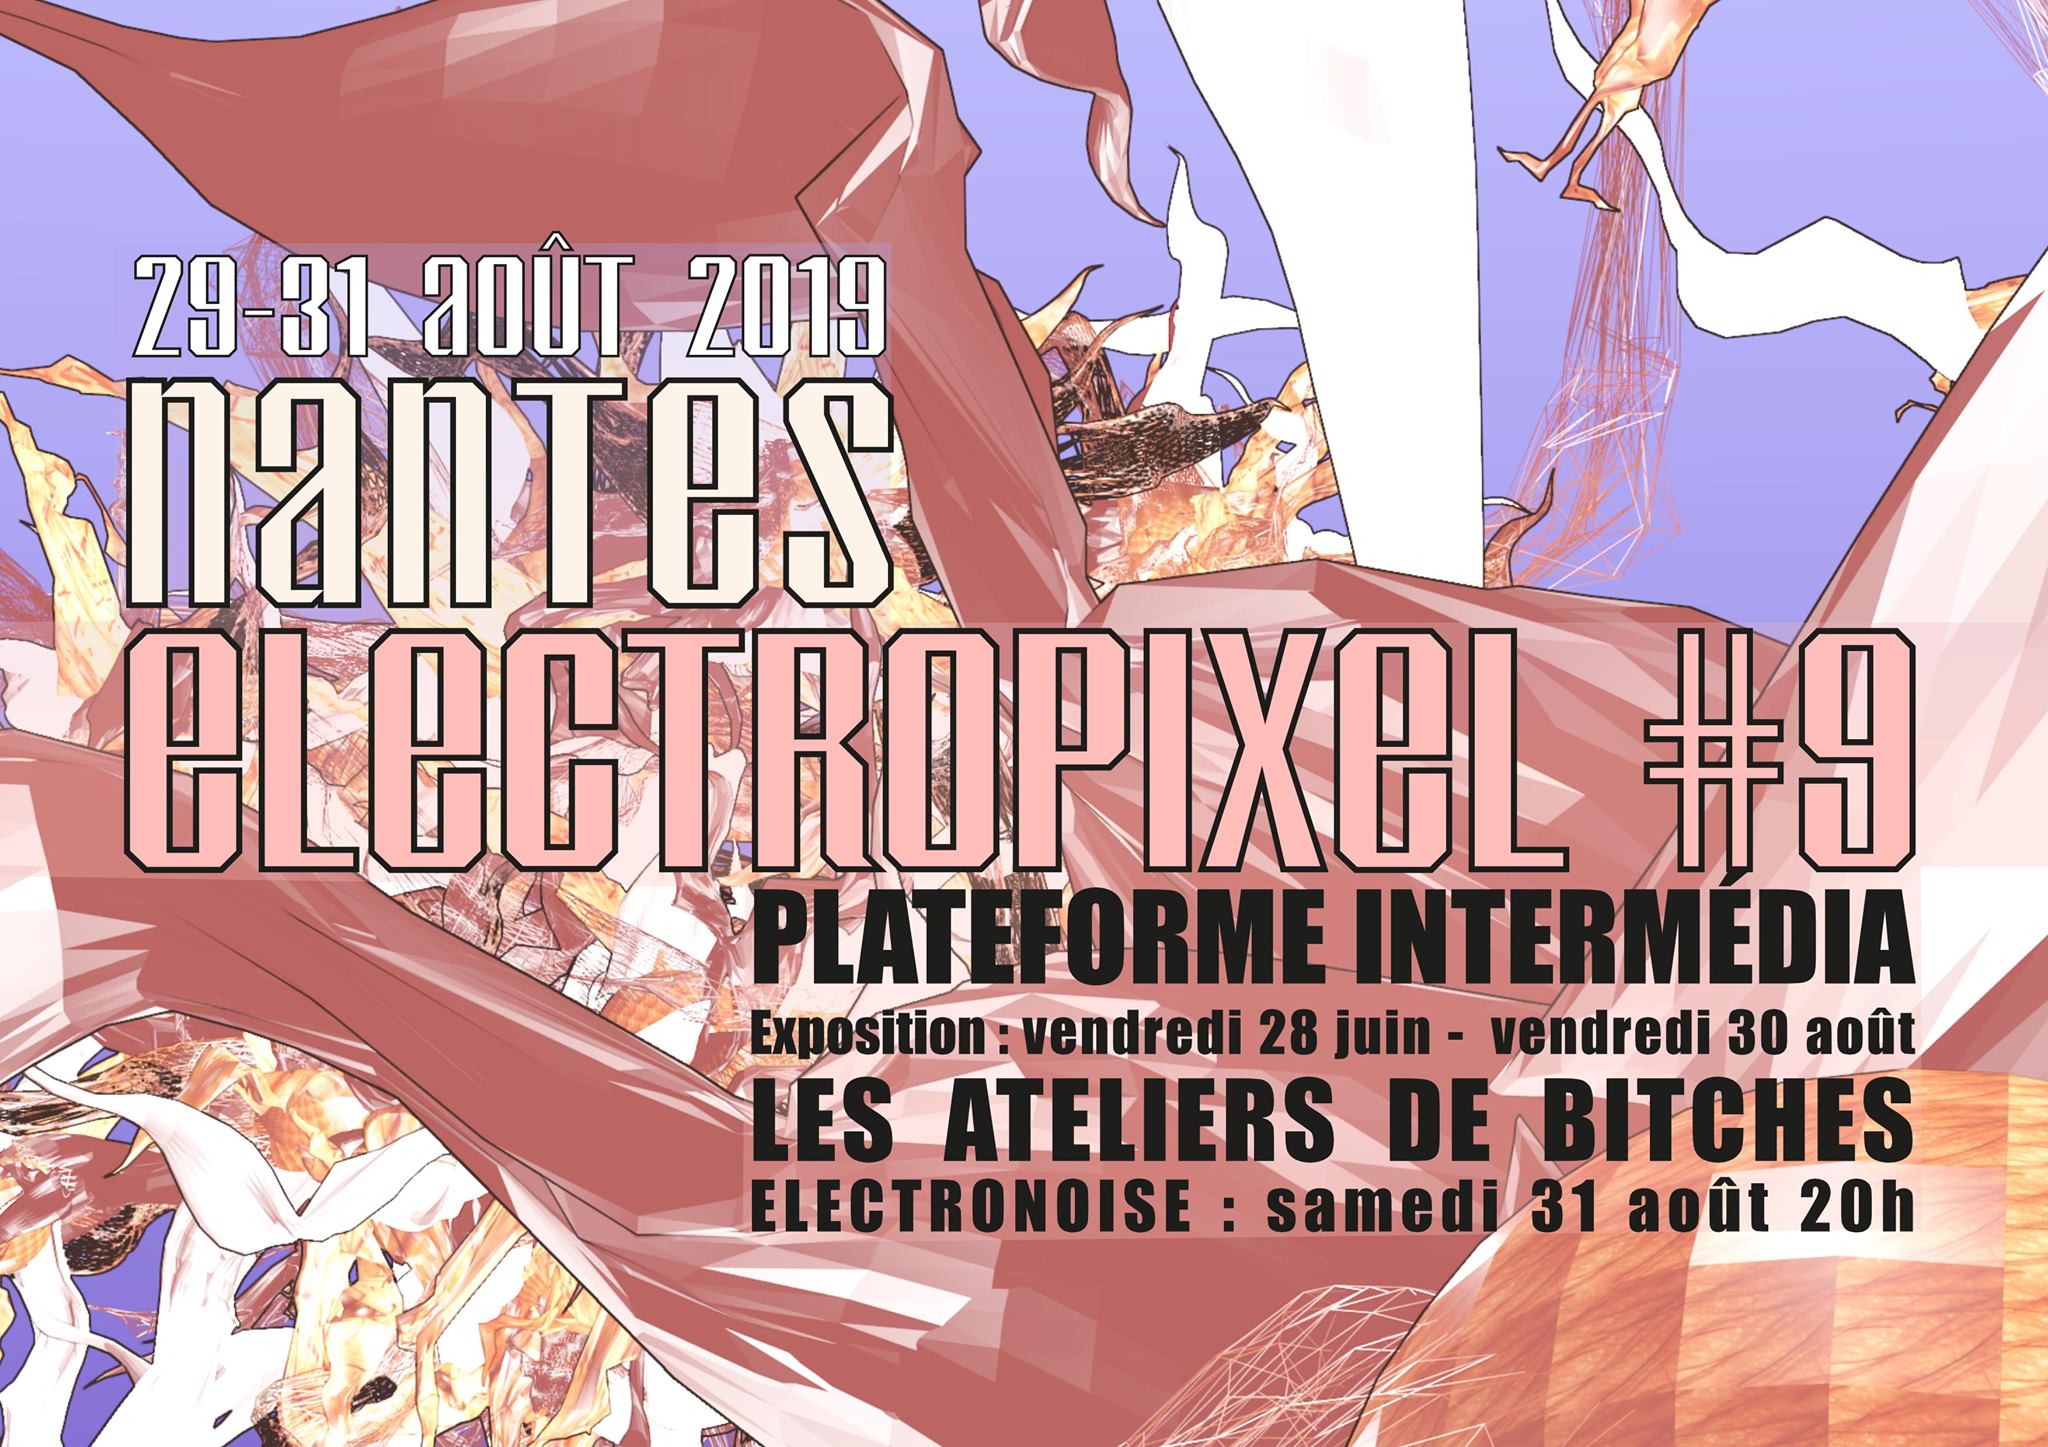 Electropixel #9 du 28 juin au 31 août : Nantes